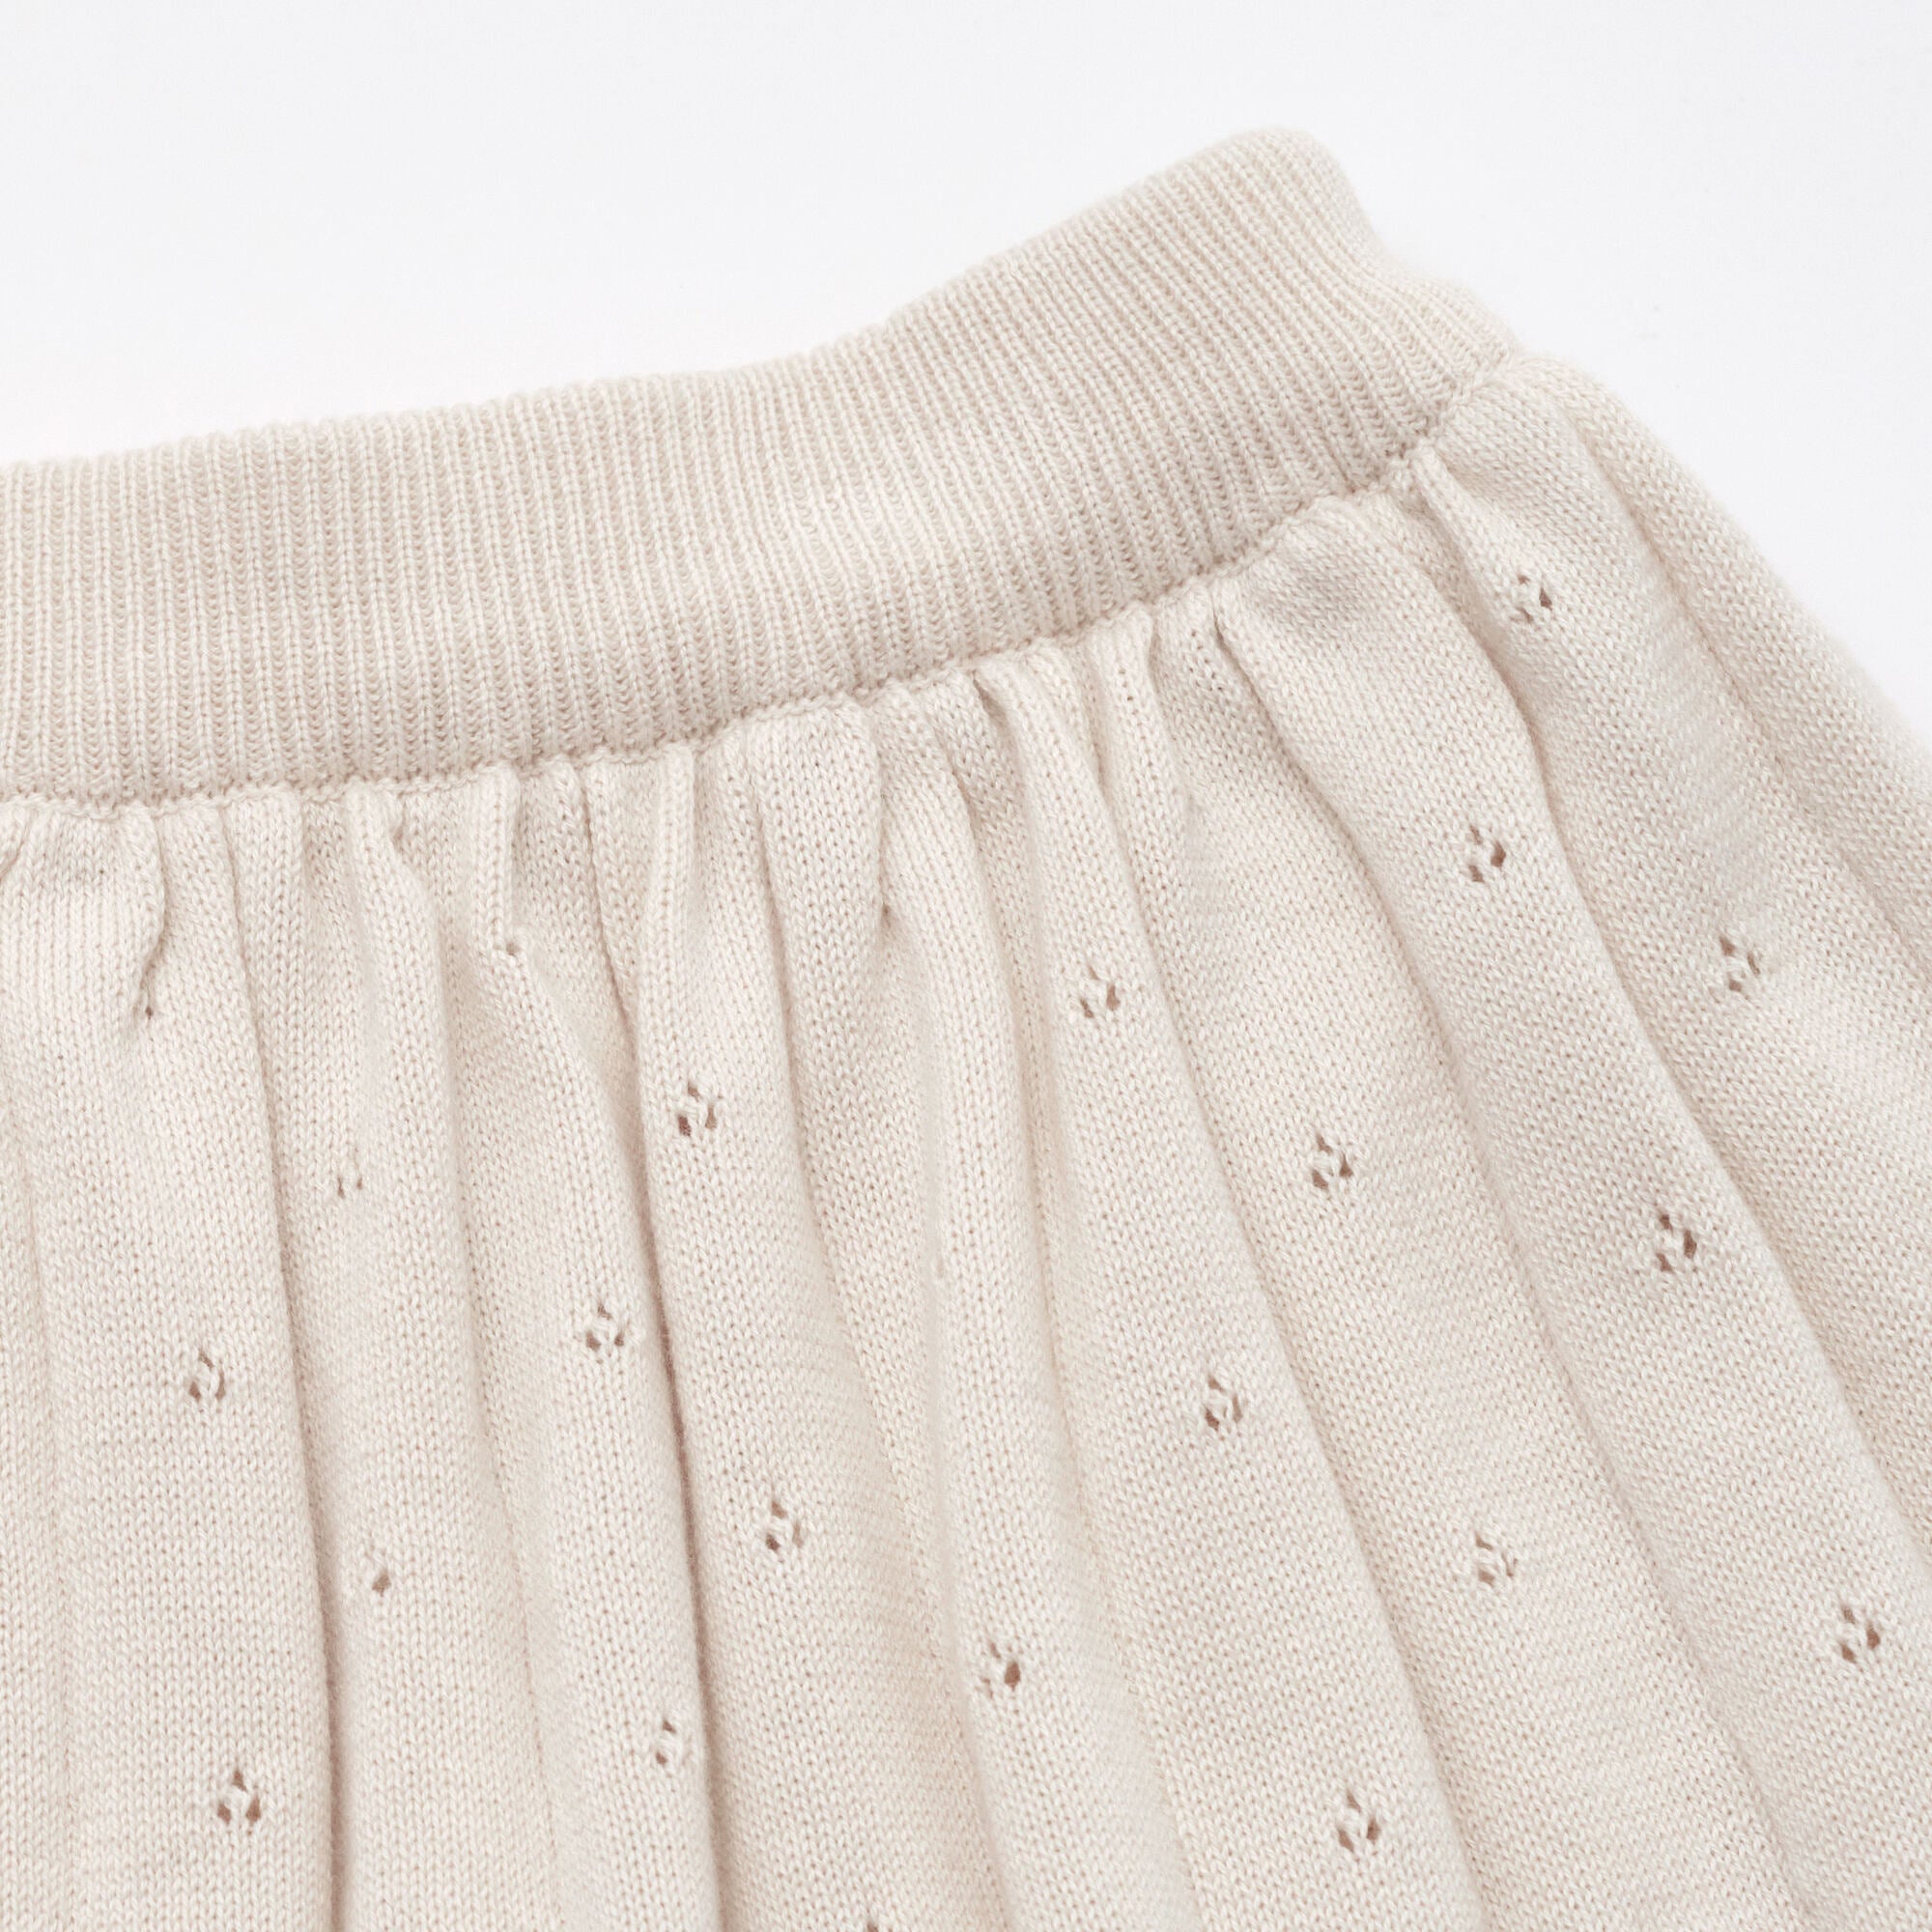 Girls Beige Knit Skirt